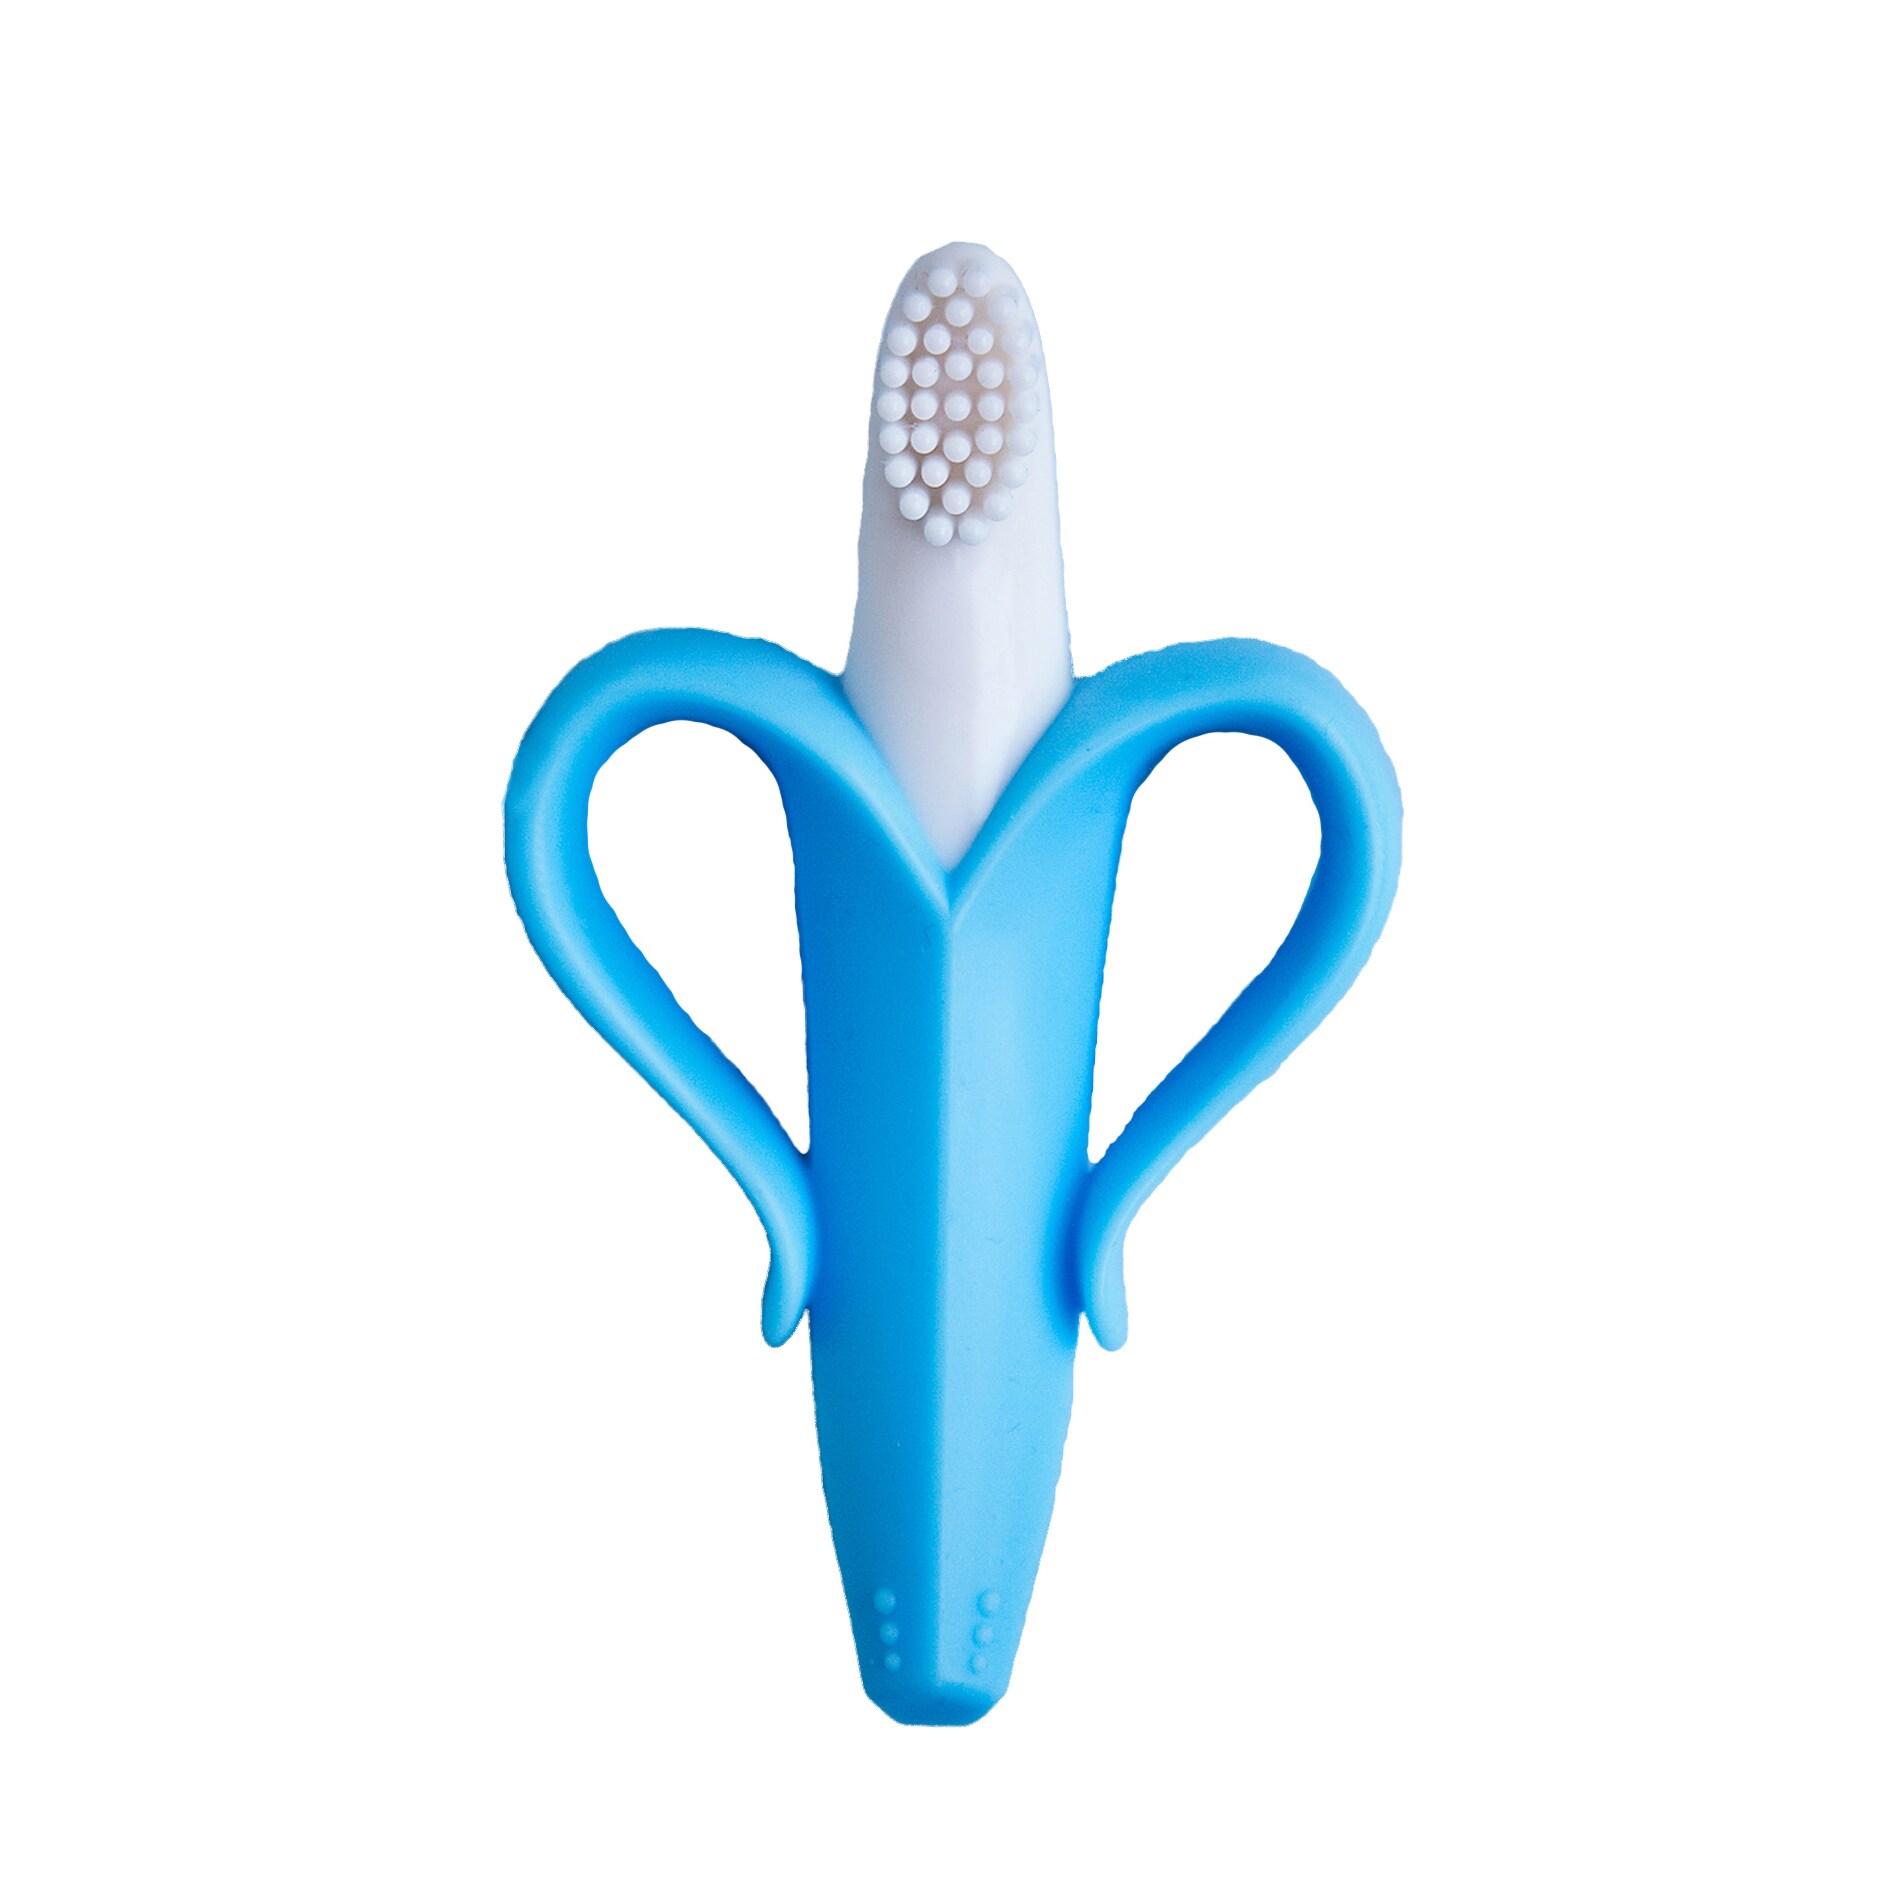 baby banana infant toothbrush